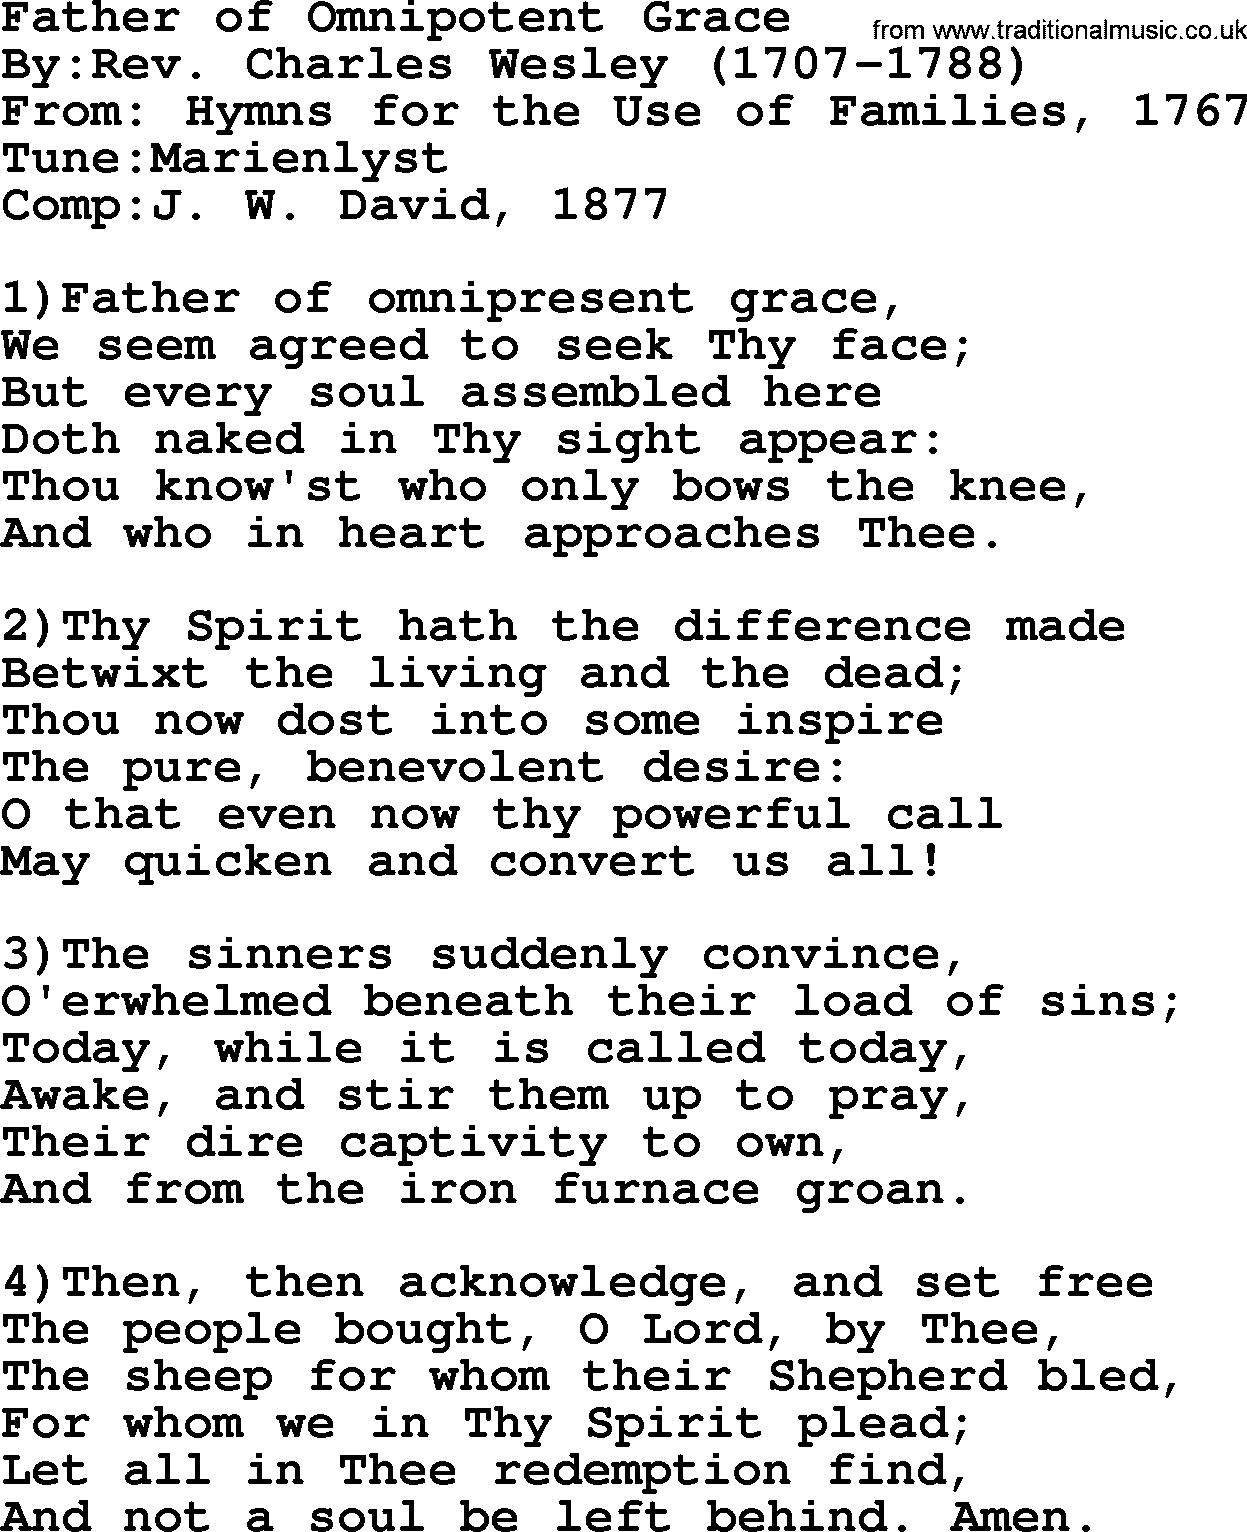 Methodist Hymn: Father Of Omnipotent Grace, lyrics